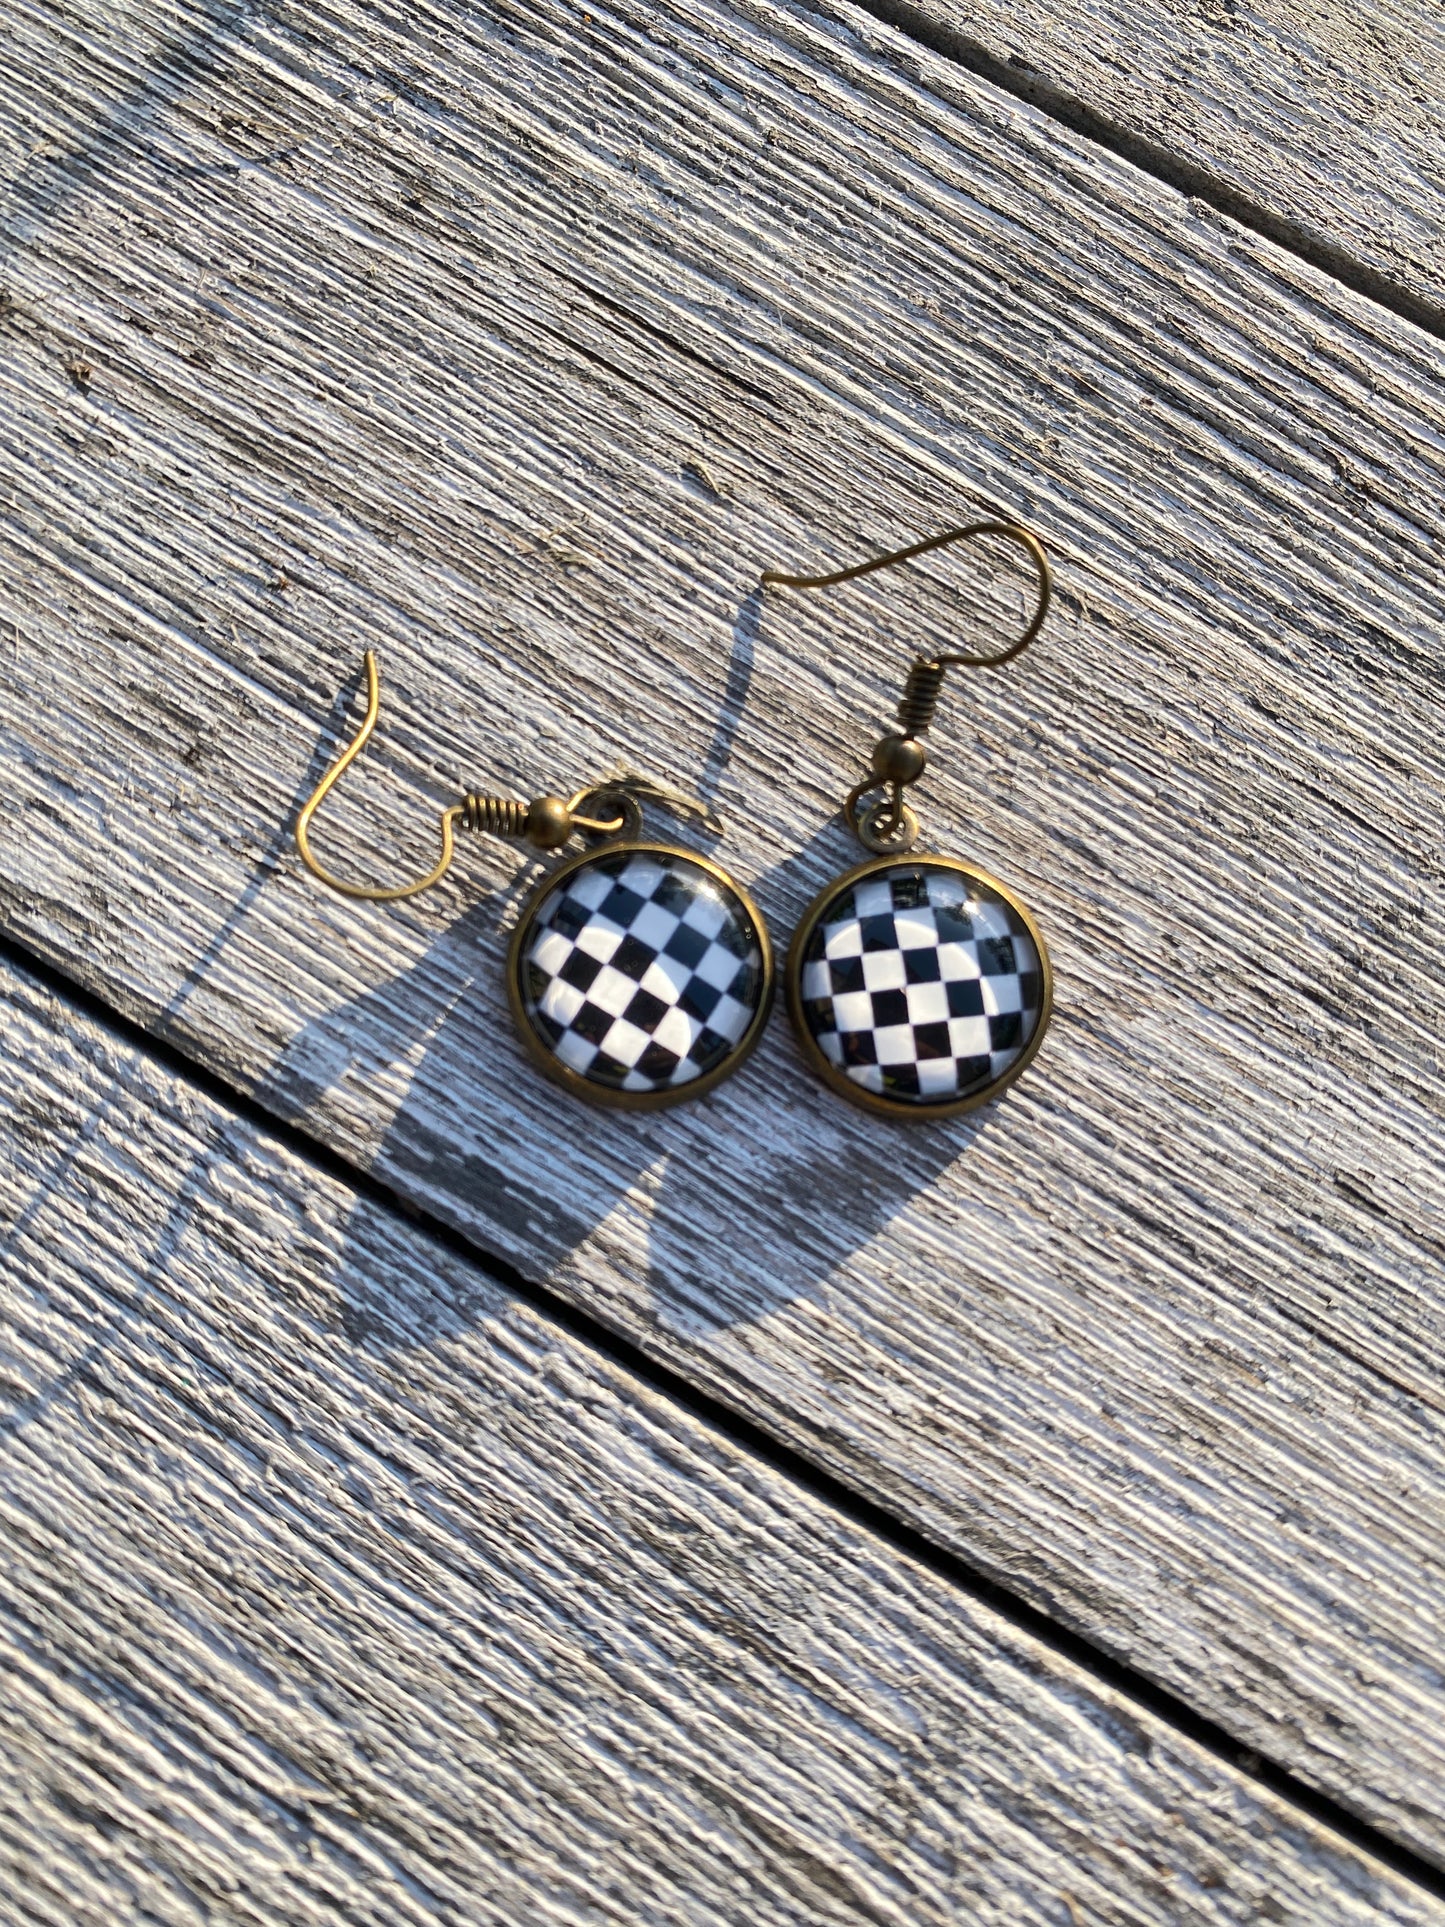 Checkered Black and white Dangle Earrings